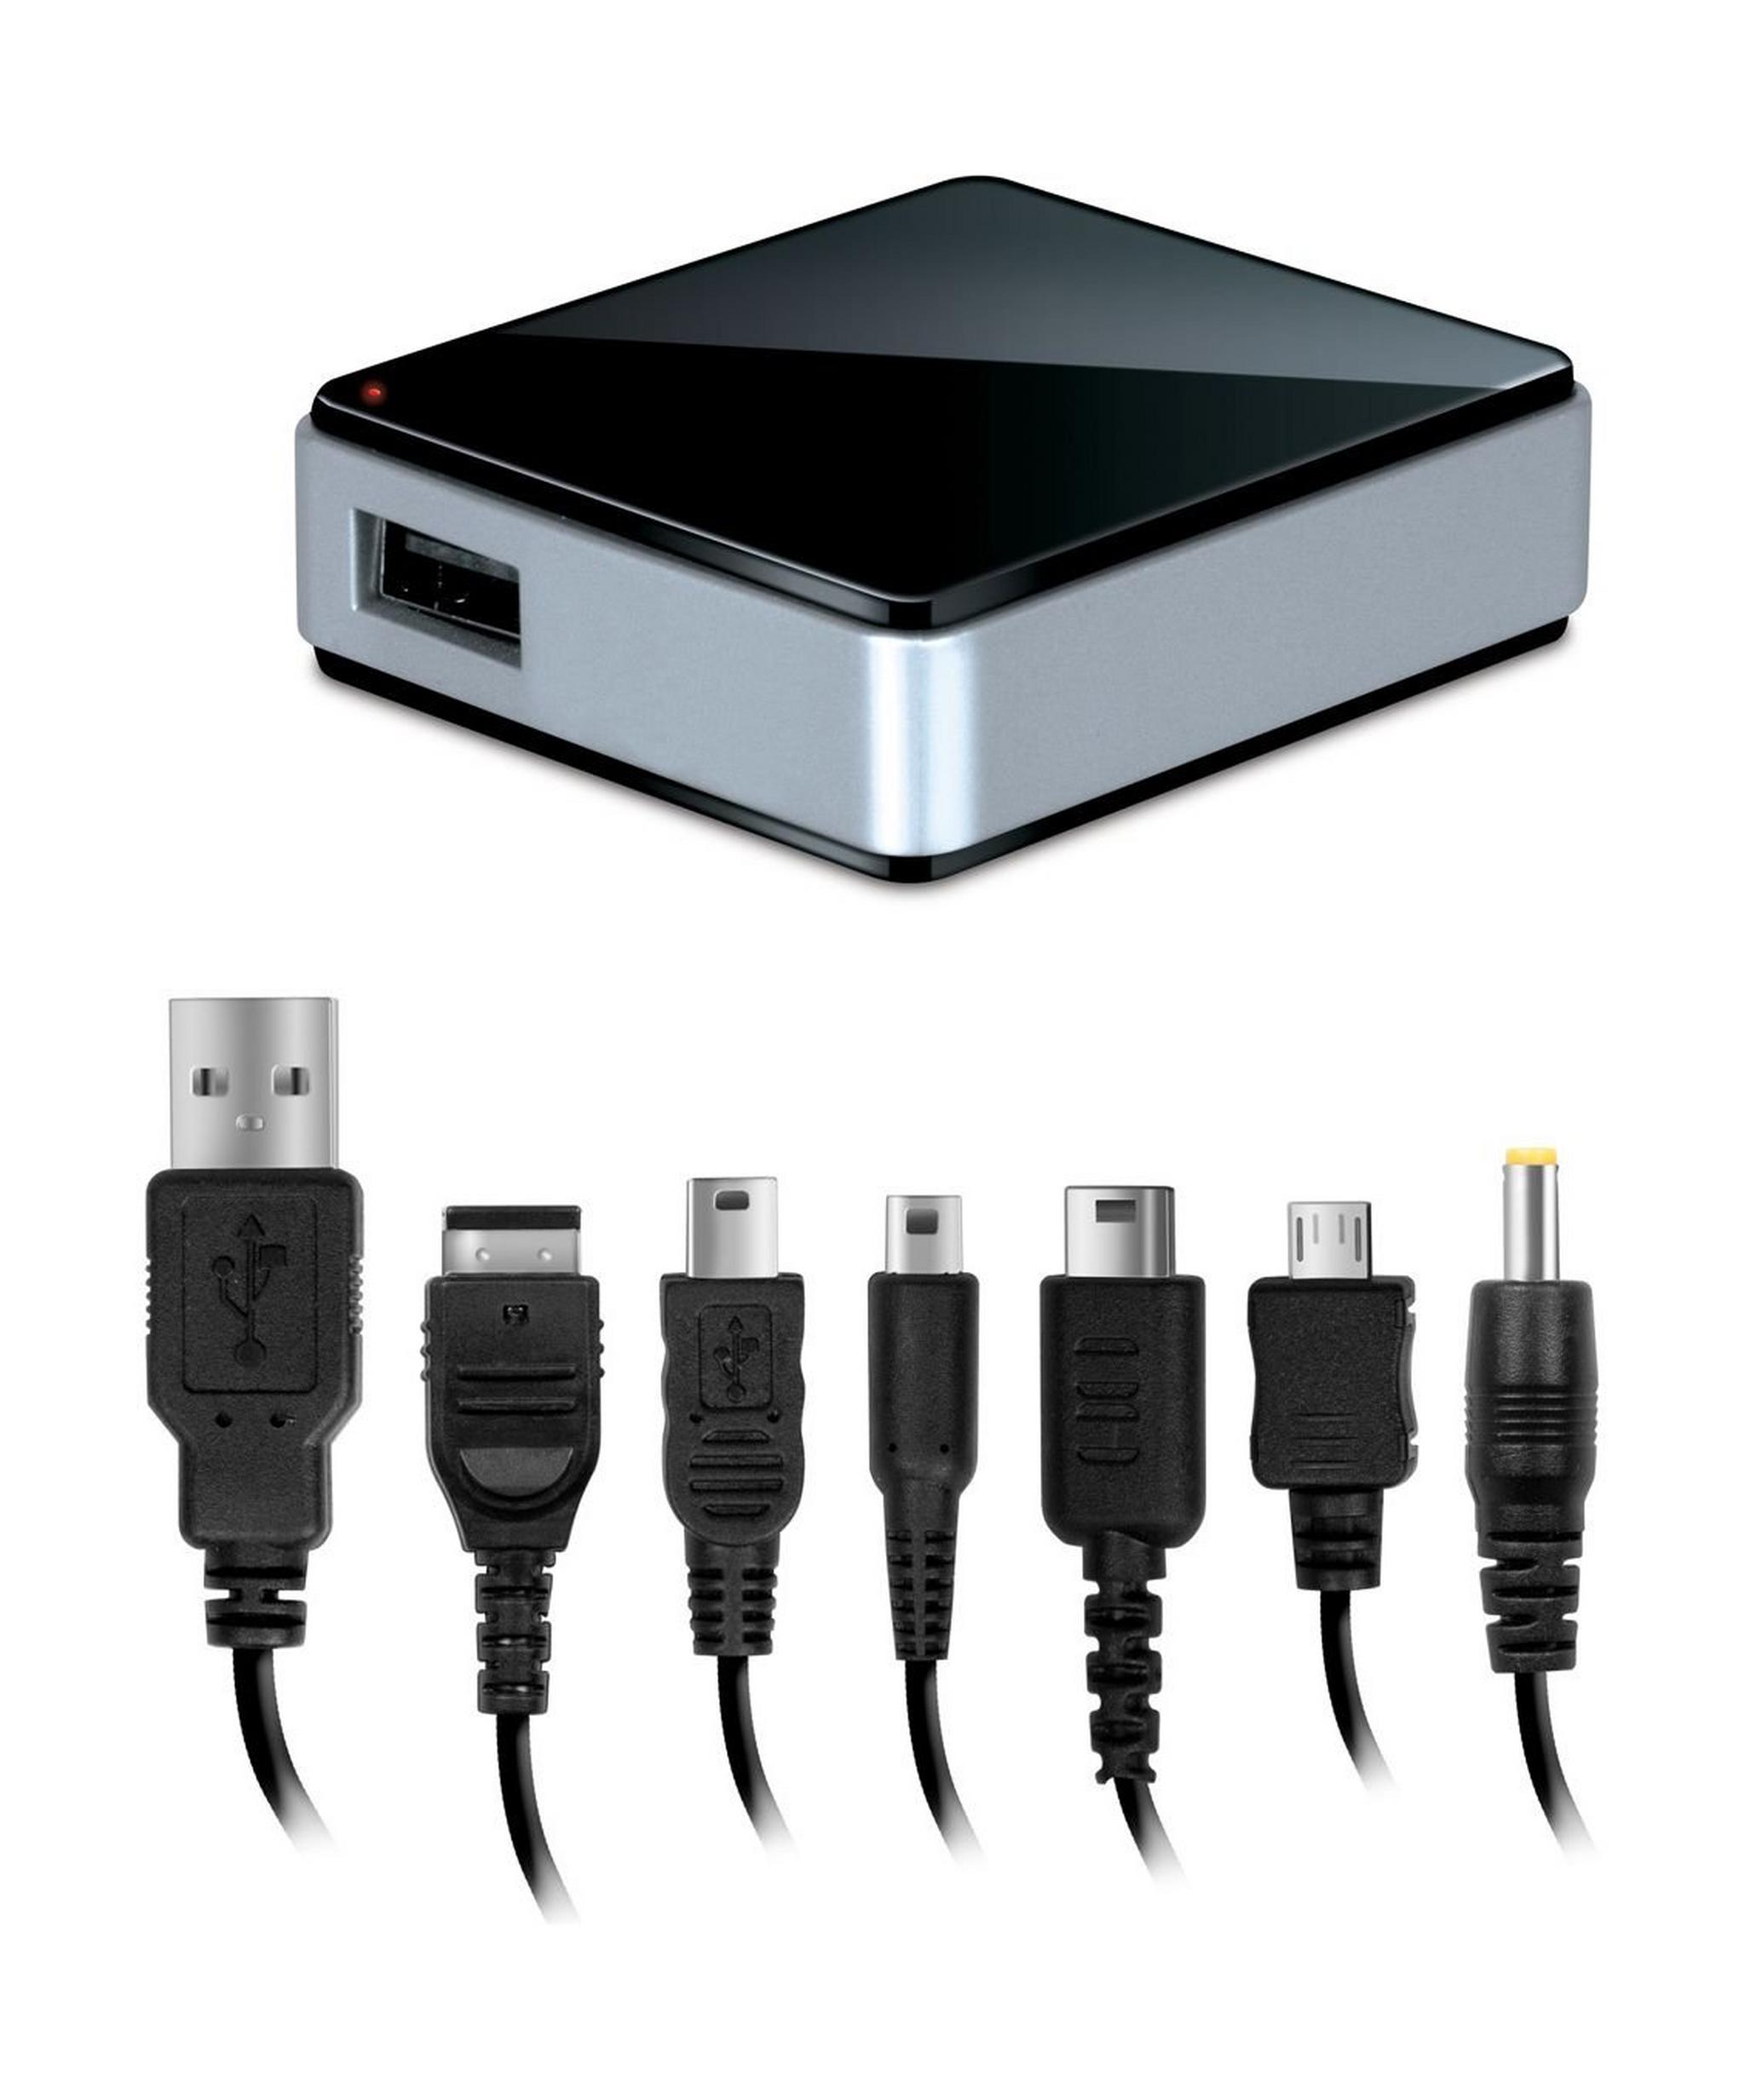 Dream Gear USB AC Adapter (DGUN-2532) - Black